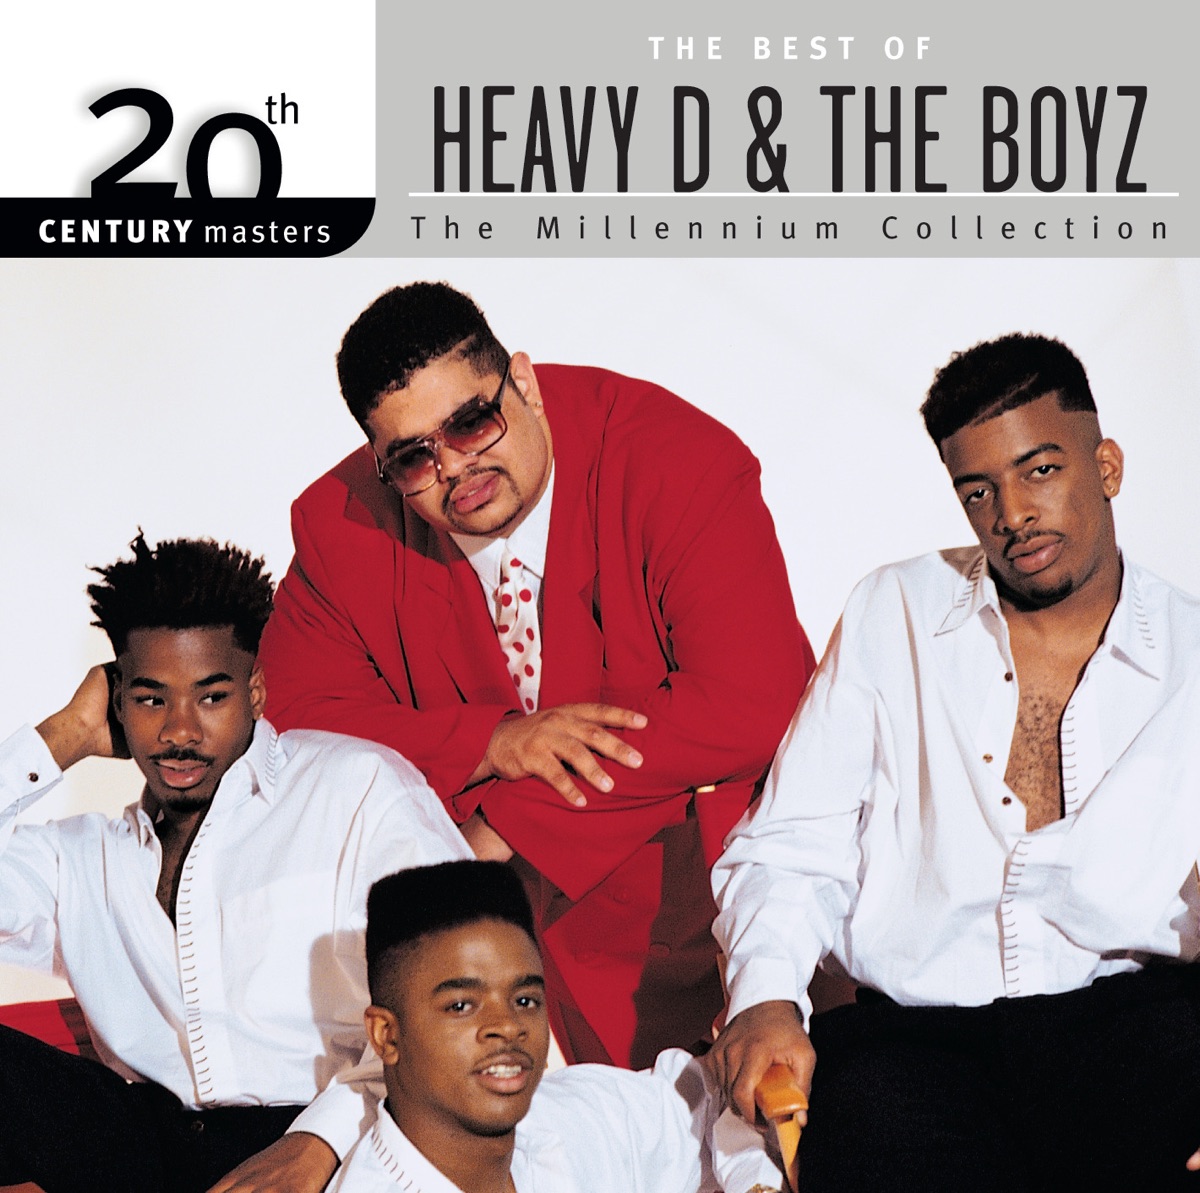 Peaceful Journey - Album by Heavy D & The Boyz - Apple Music